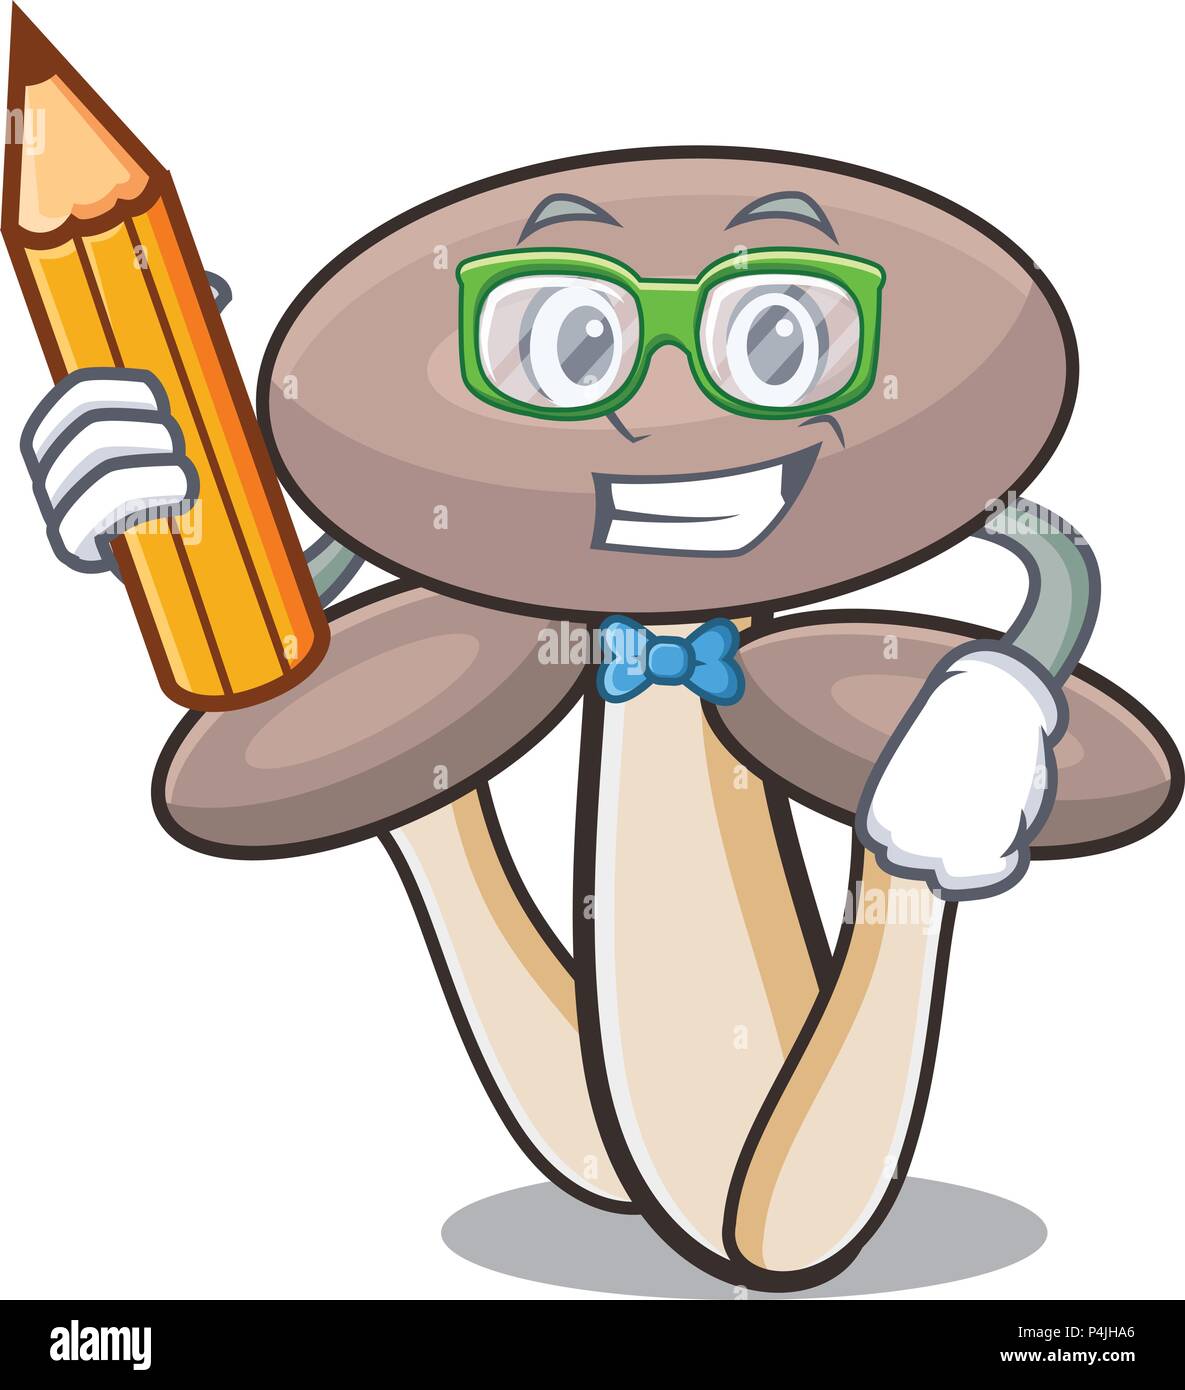 Student honey agaric mushroom character cartoon Stock Vector